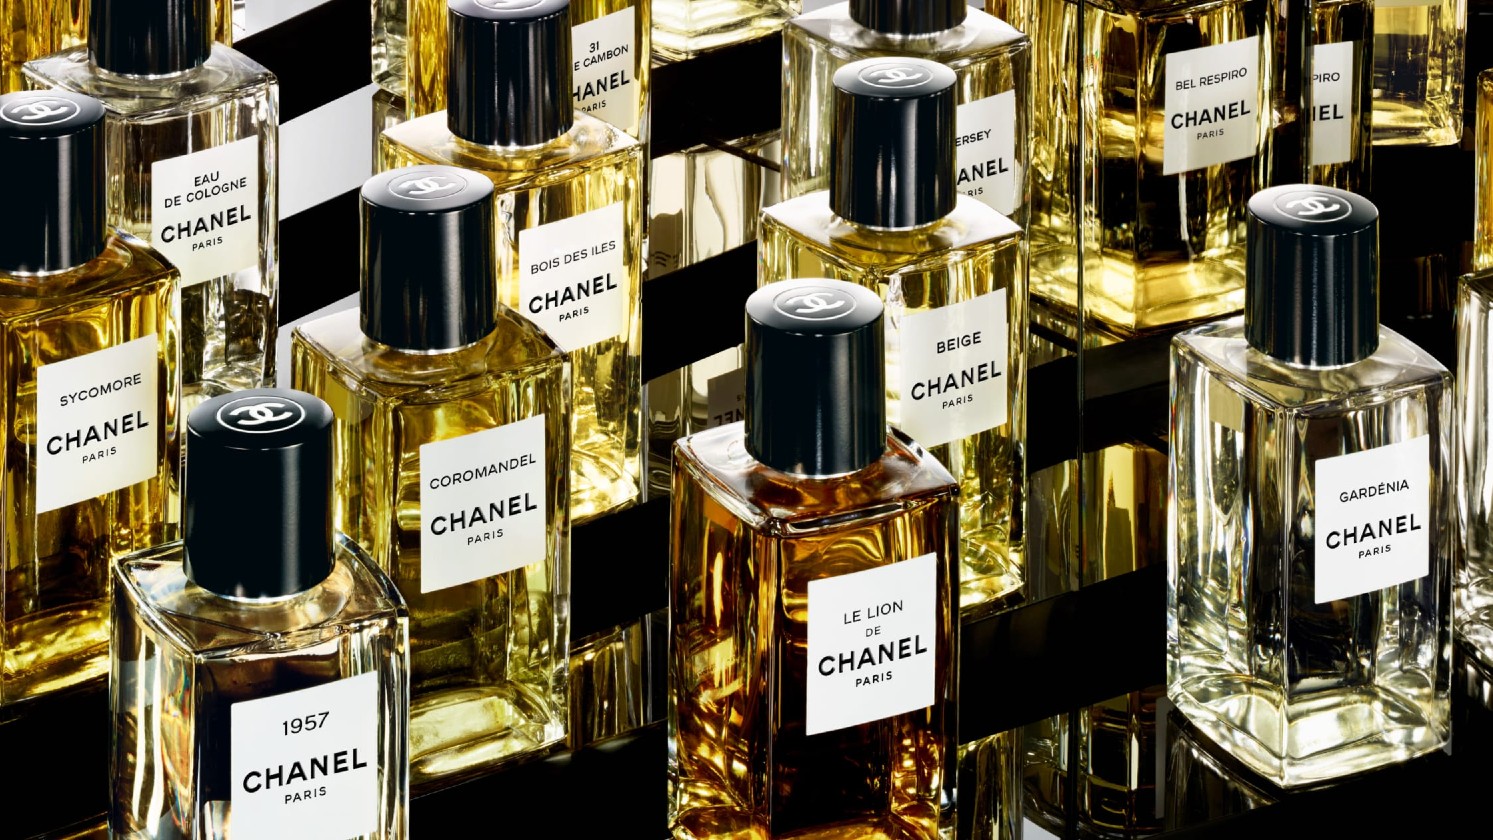 women's perfume coco chanel